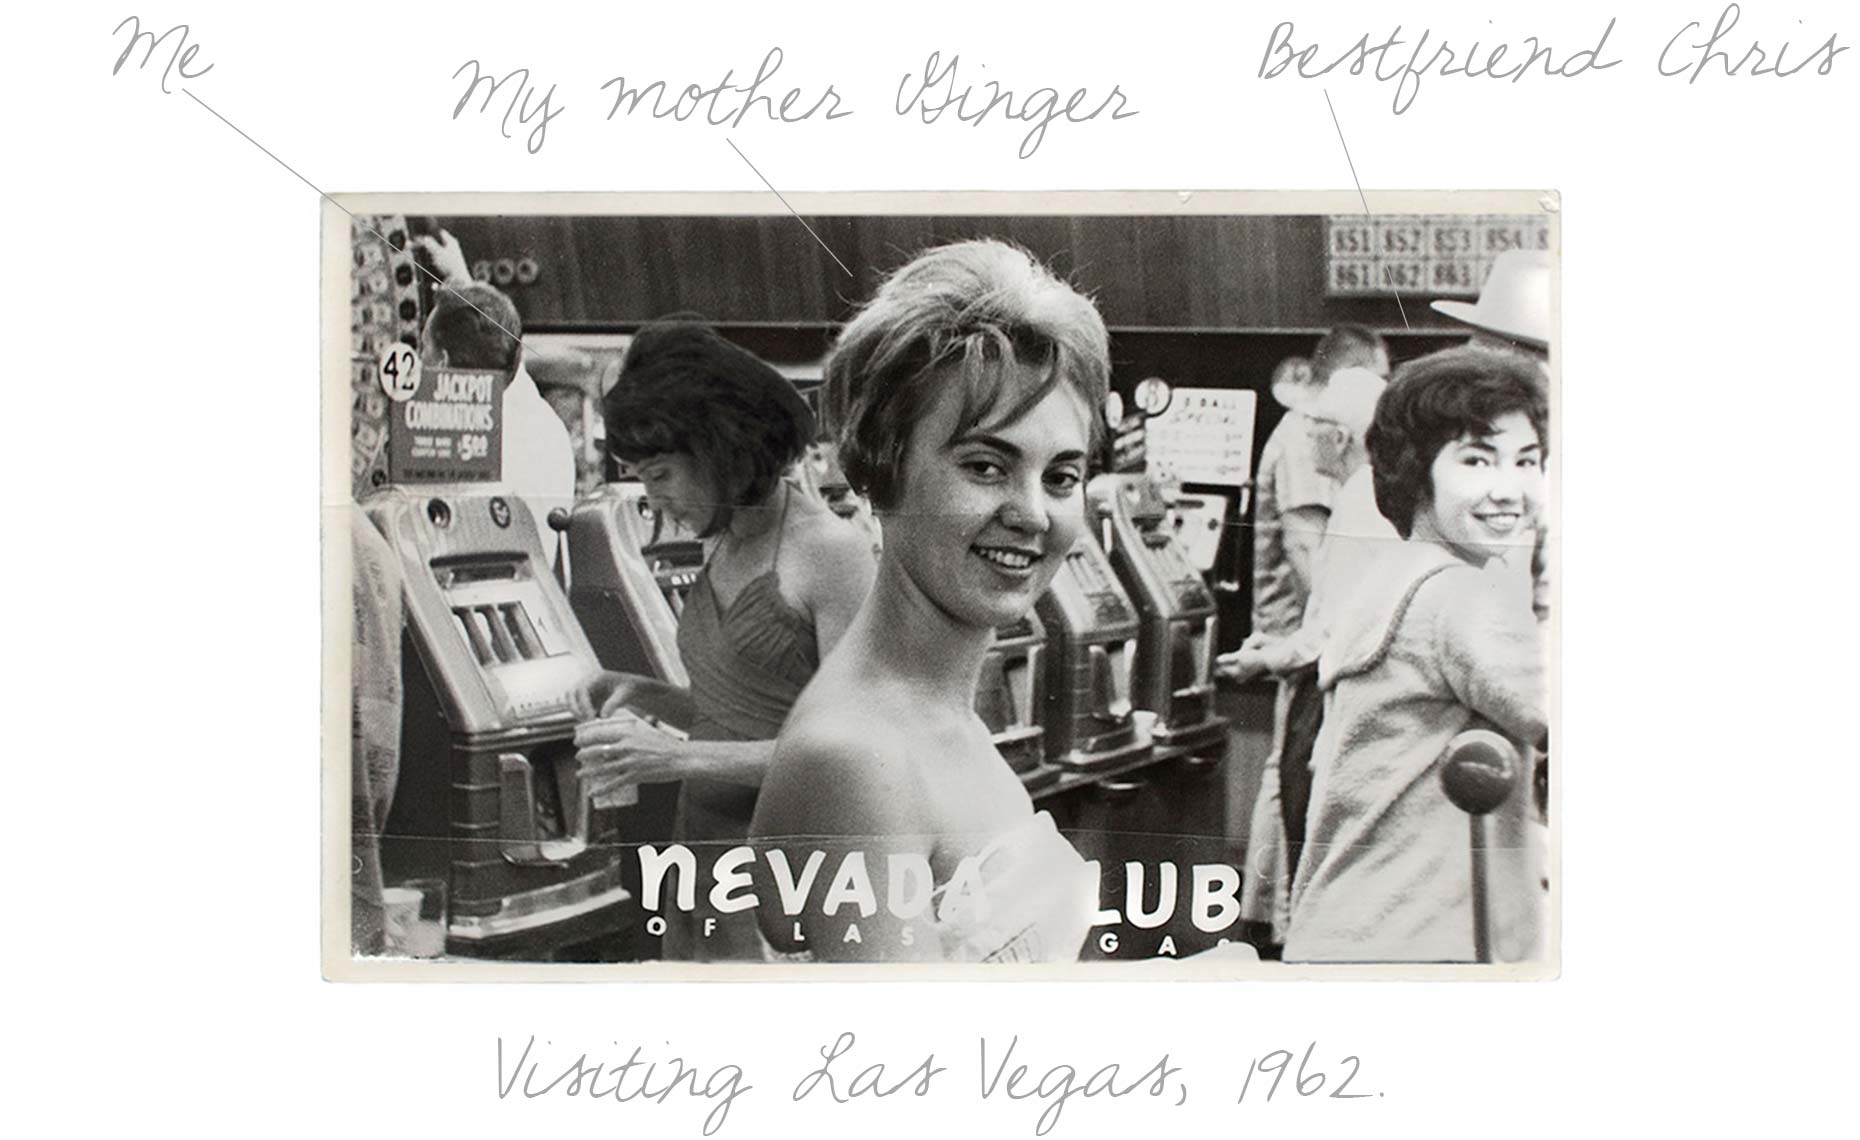 Visiting Las Vegas, 1962